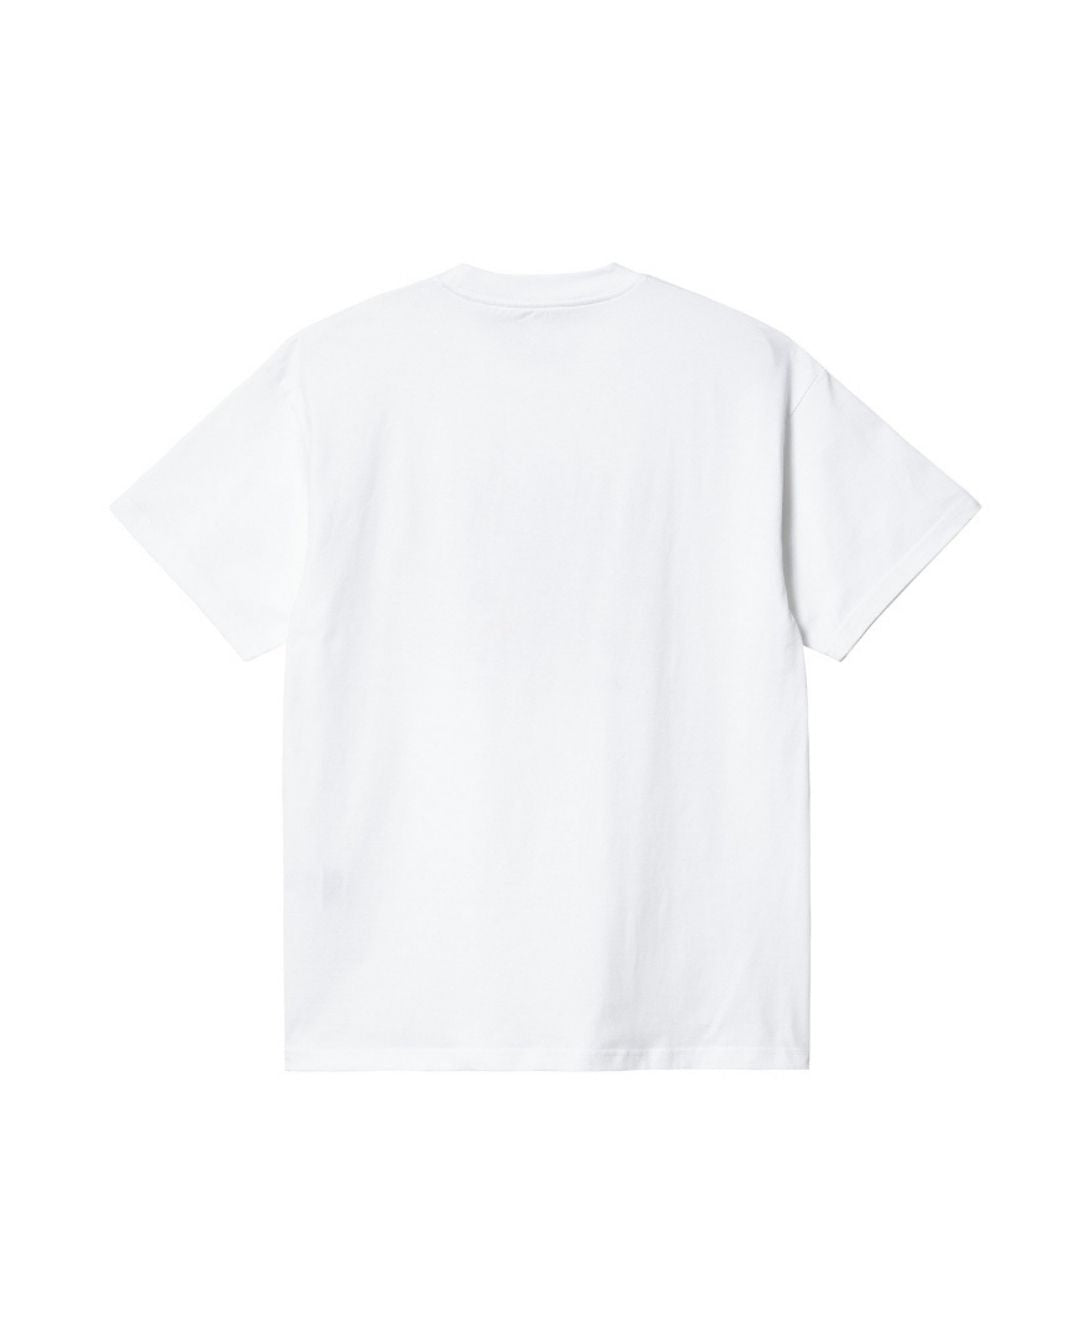 S/S Unity T-Shirt